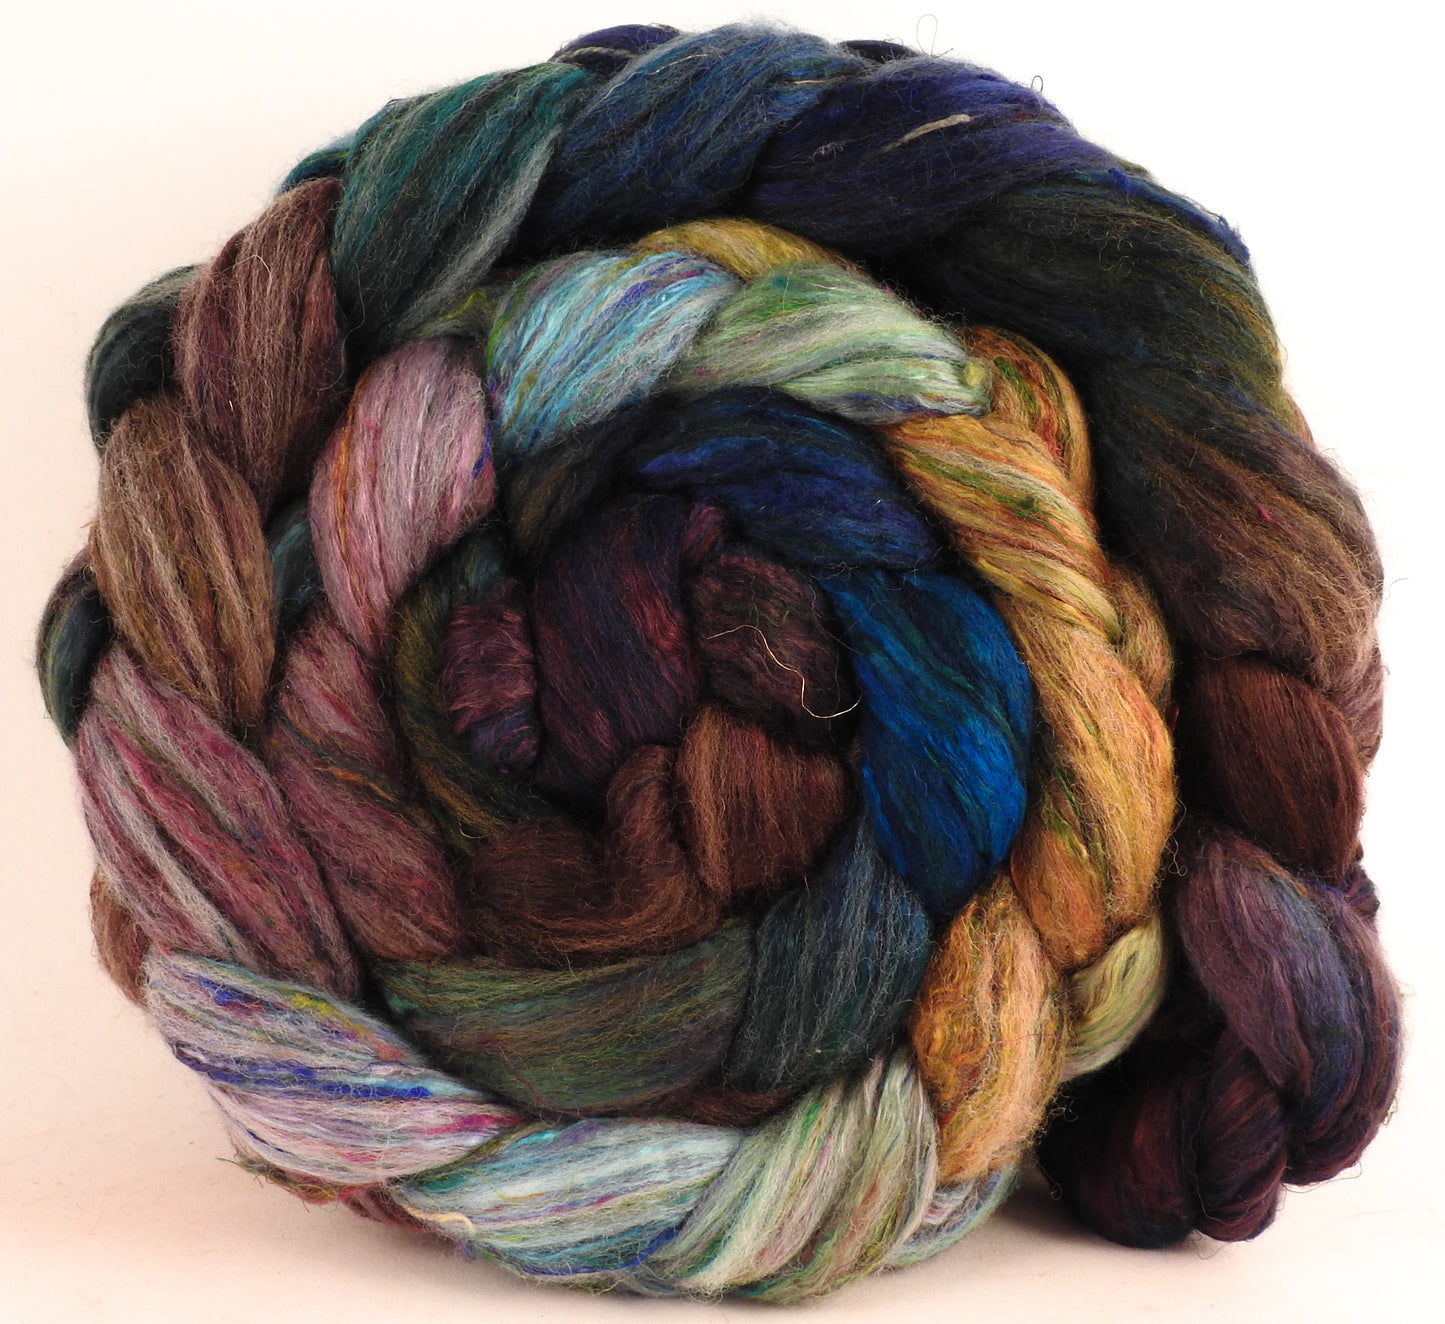 Batt in a Braid #39 - Selkie- (5.9 oz) - Falkland Merino/ Mulberry Silk / Sari Silk (50/25/25)